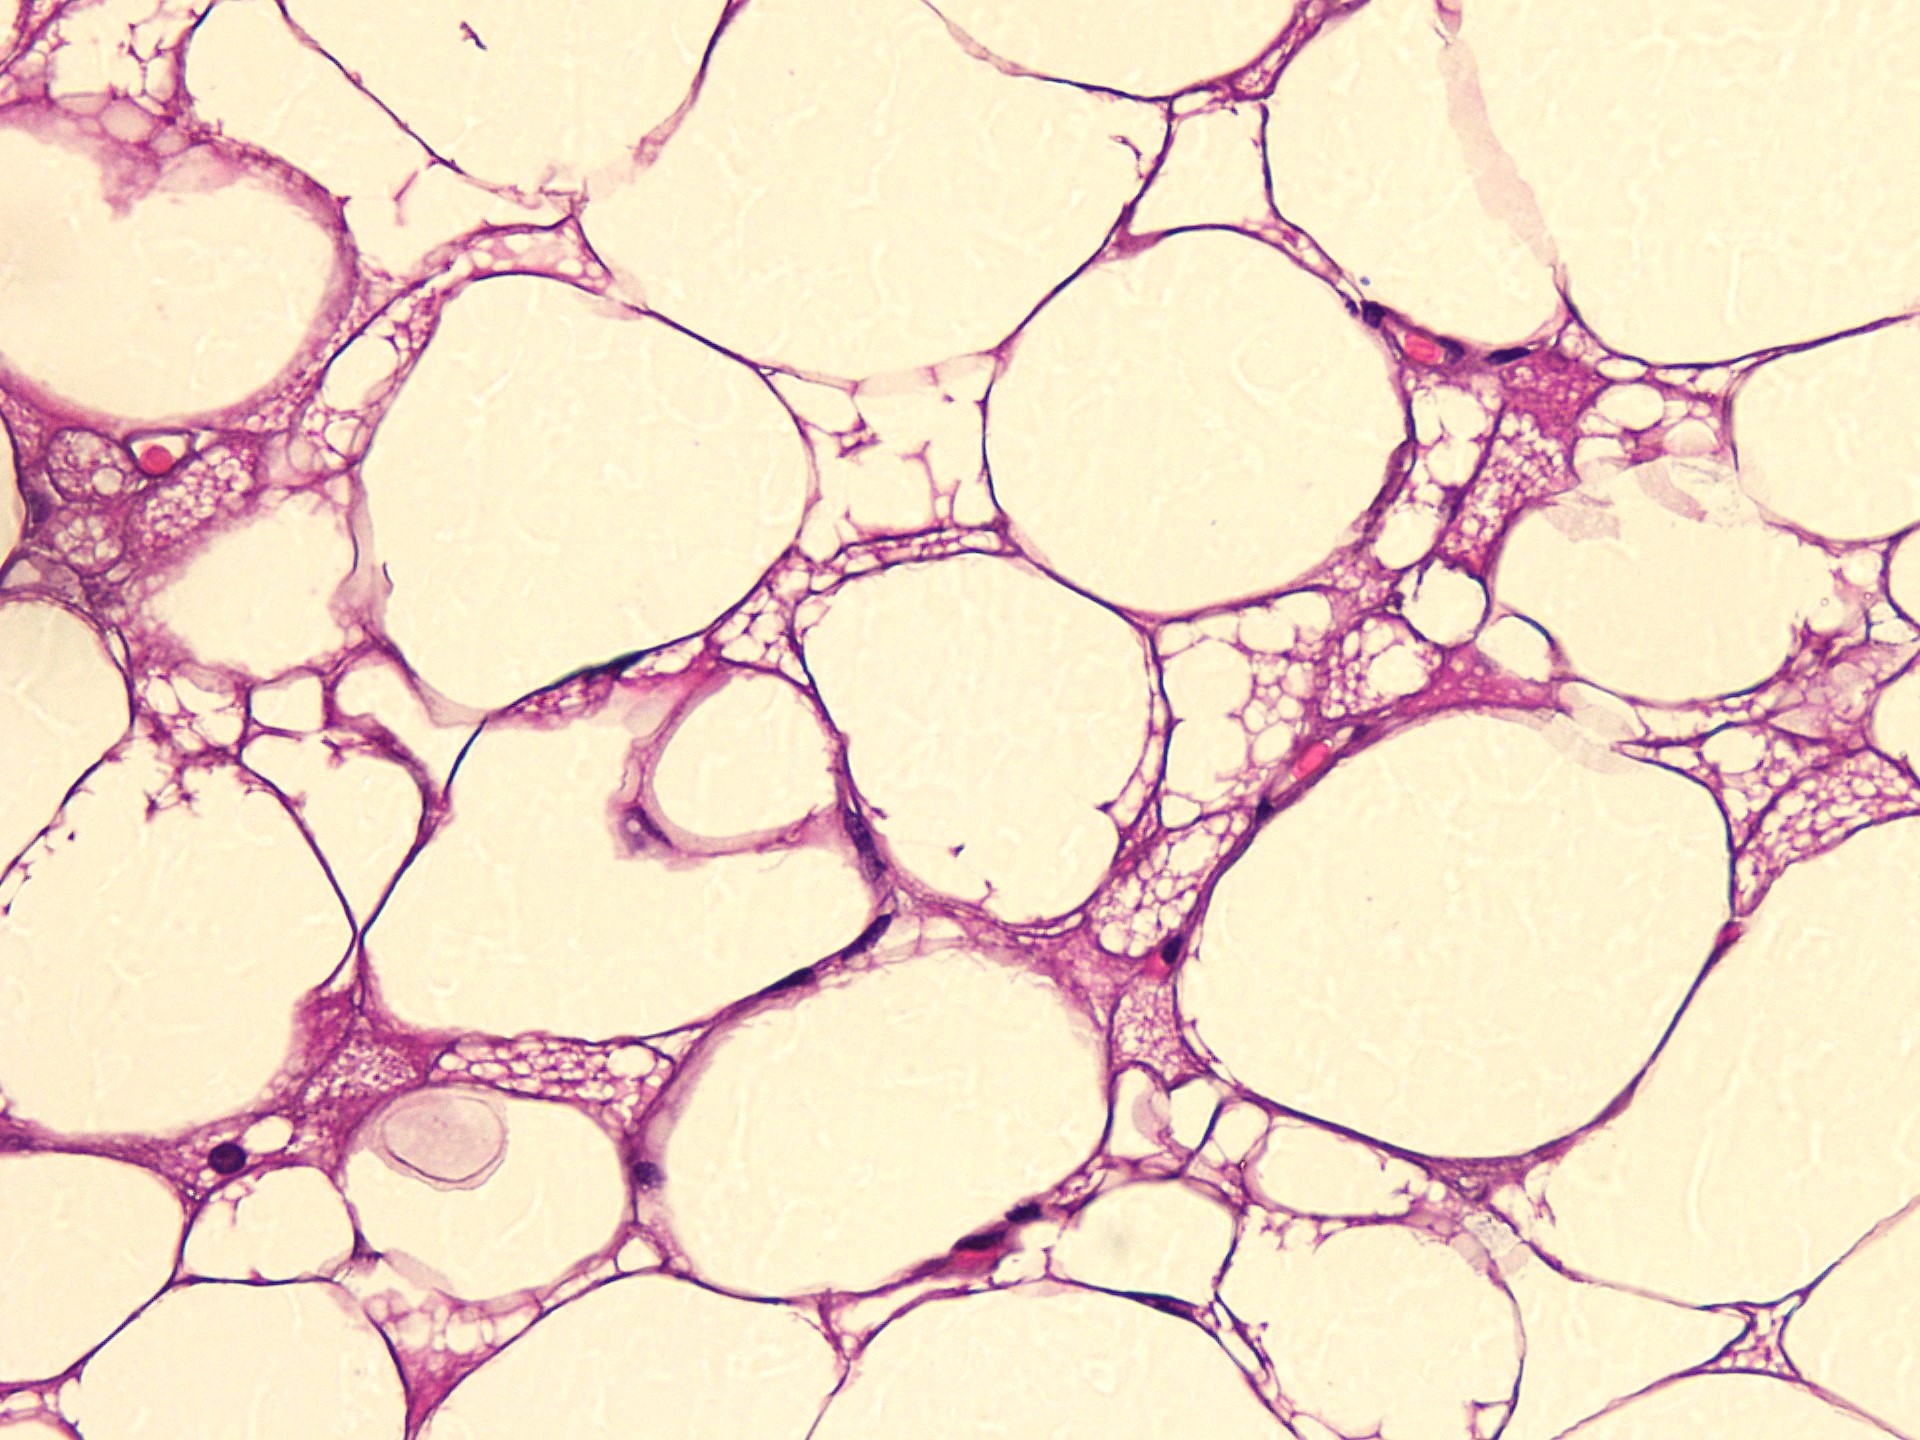 Univacuolated and granular eosinophilic cells